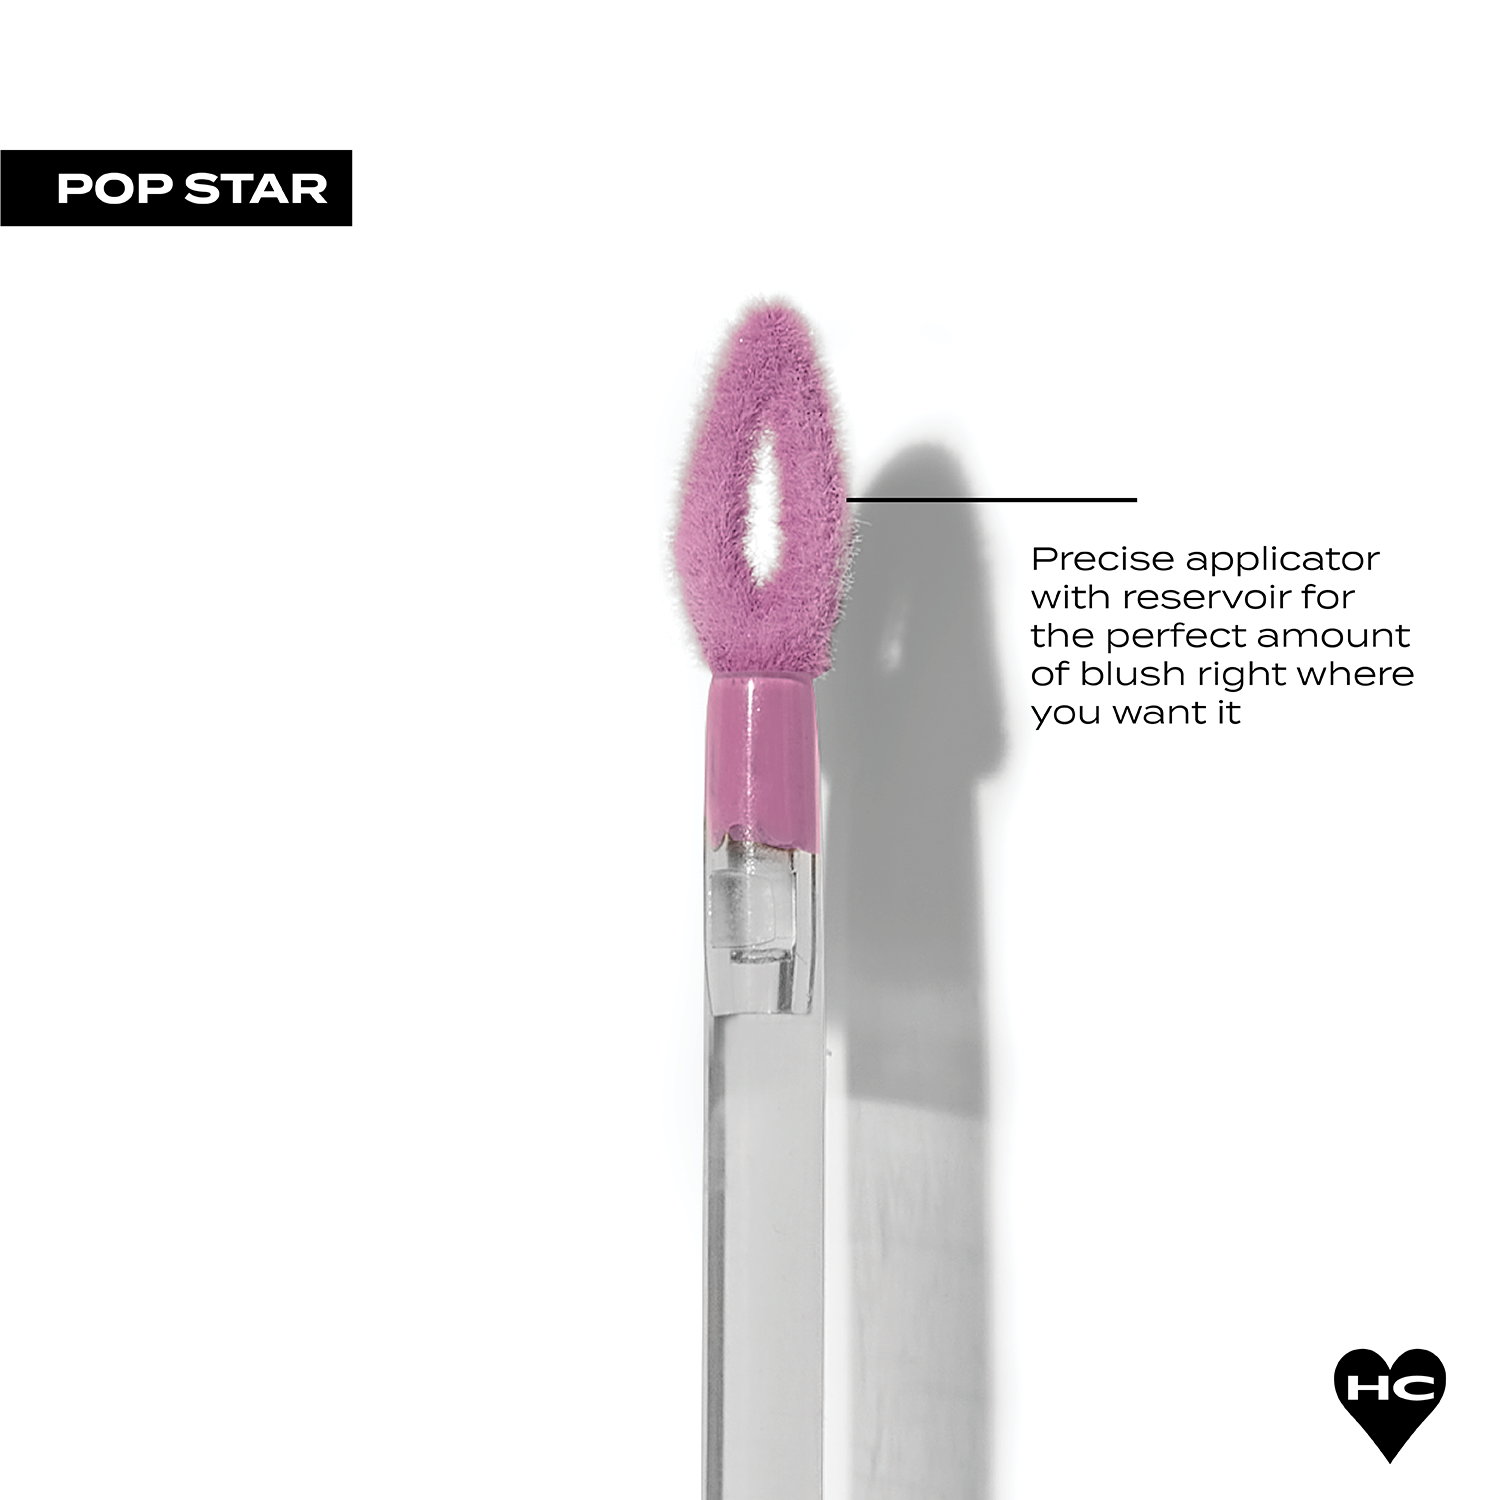 Hard Candy, Face Off Luminous Liquid Blush, Pop Star, 0.33 oz - image 3 of 7